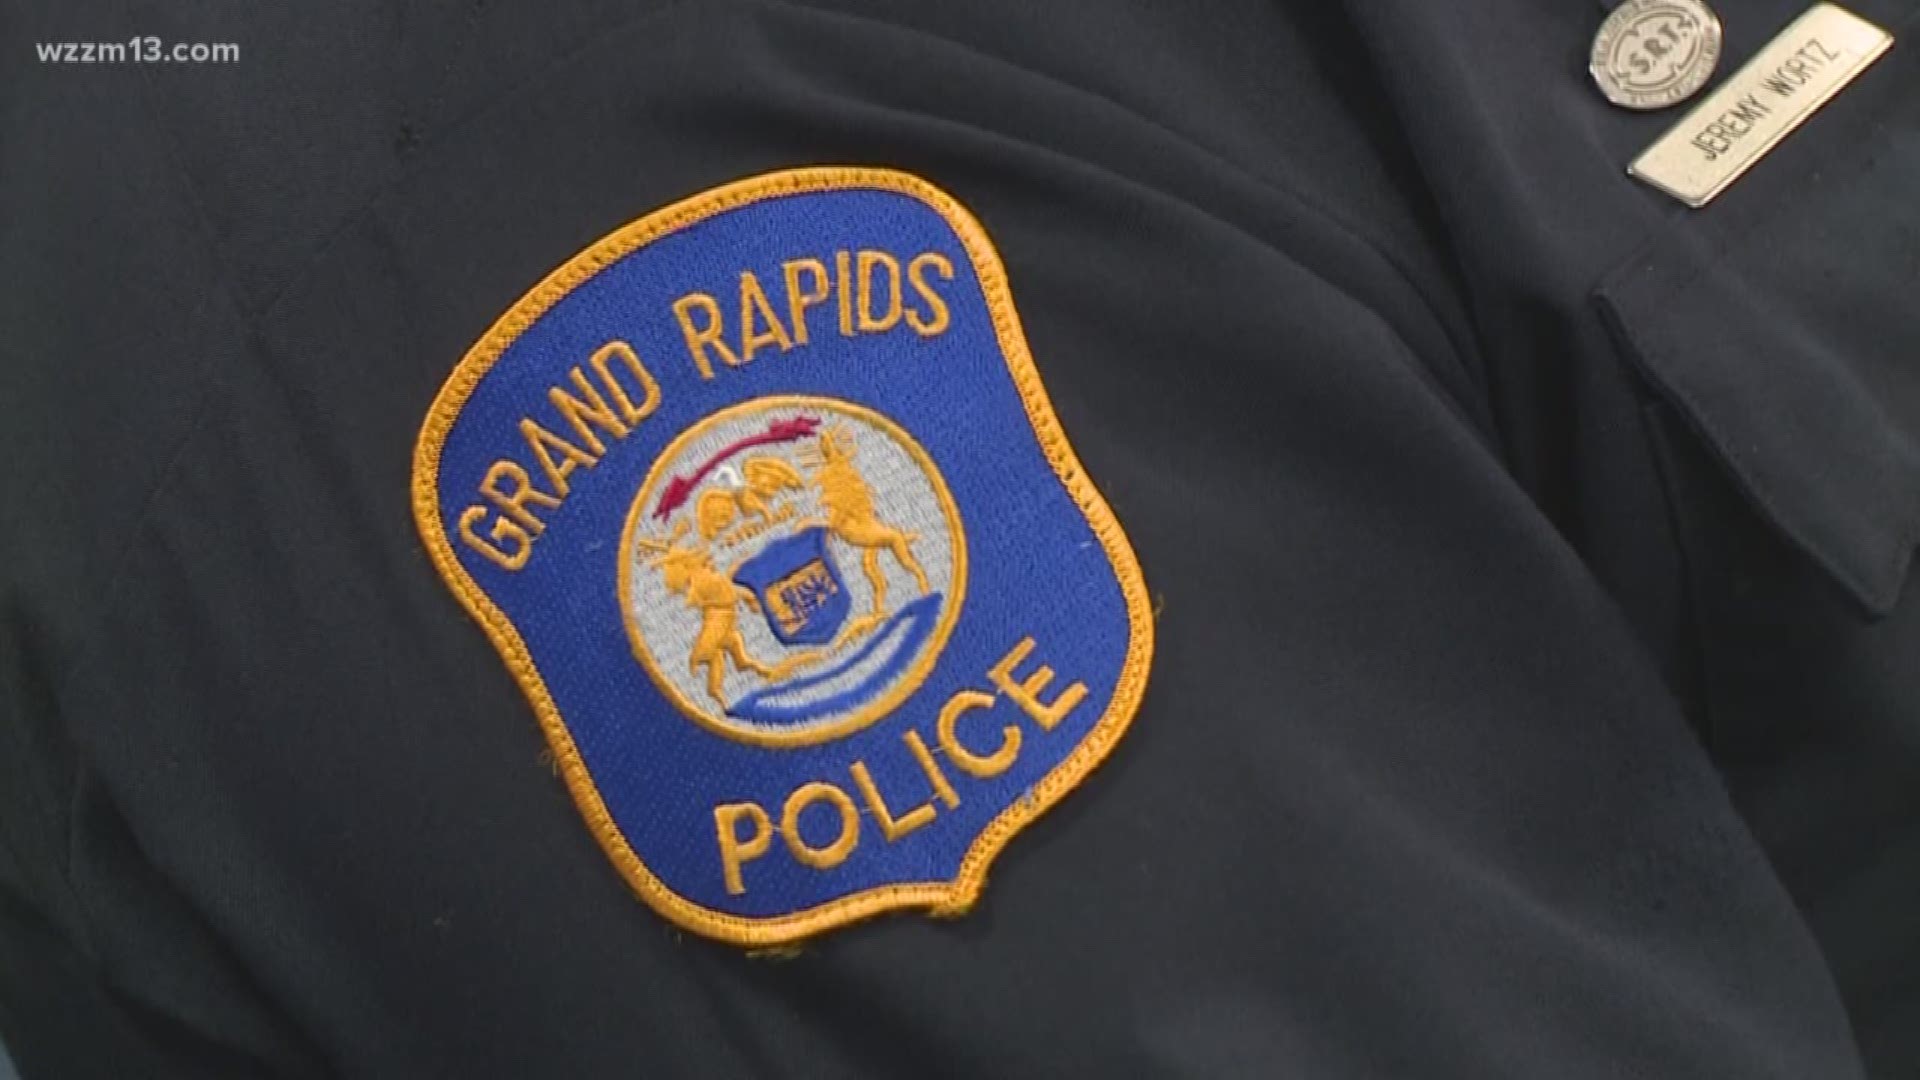 Public hearing held on Grand Rapids ordinance focused on racial profiling